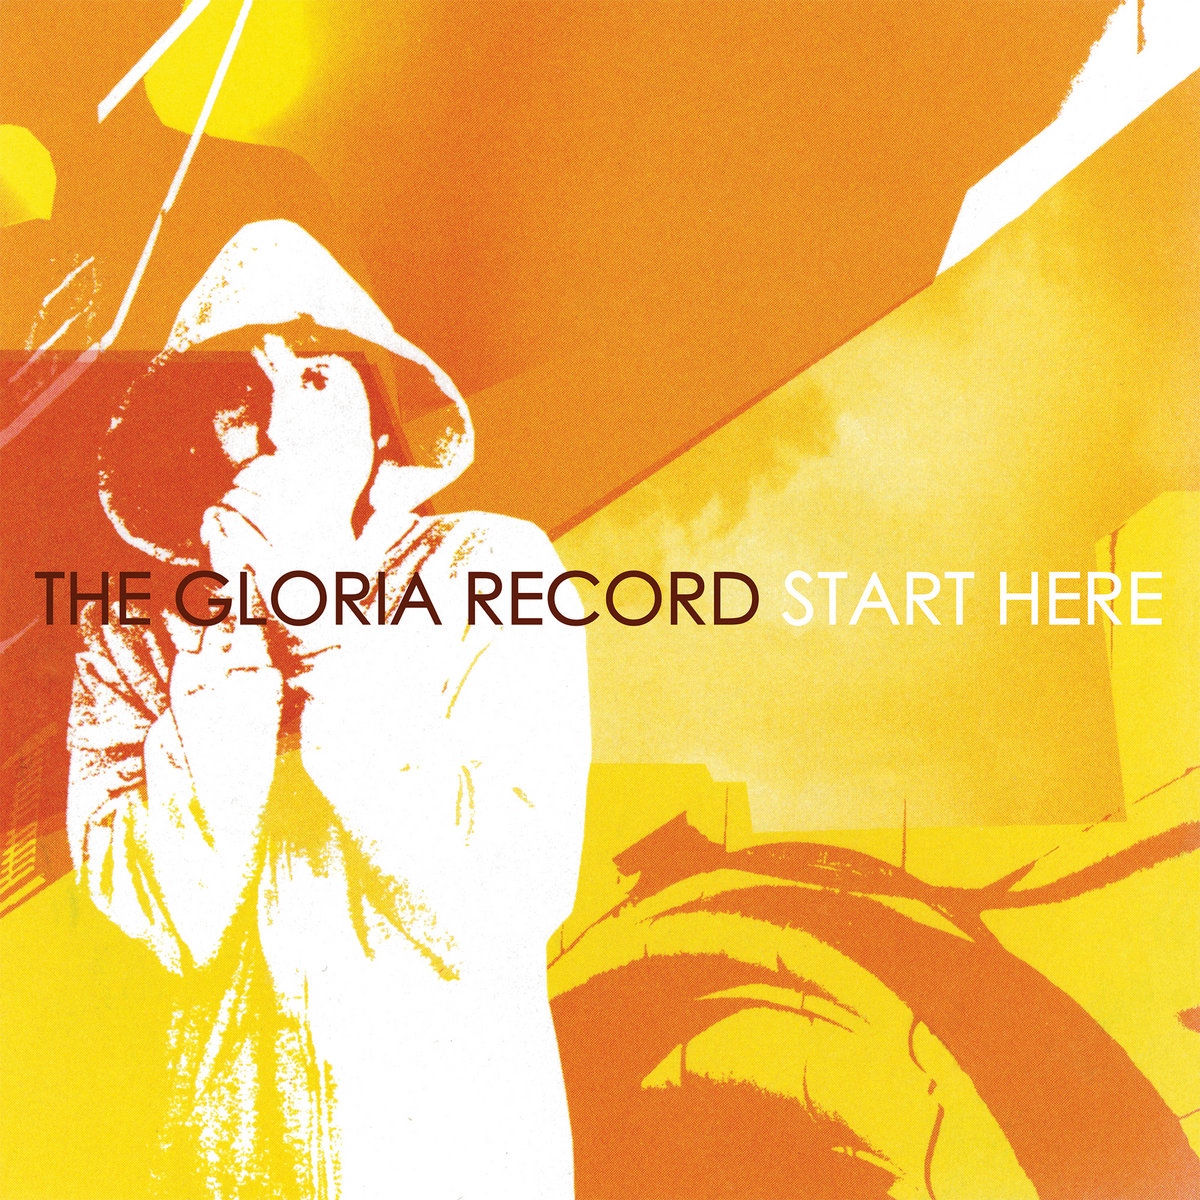 The Gloria Record Start Here